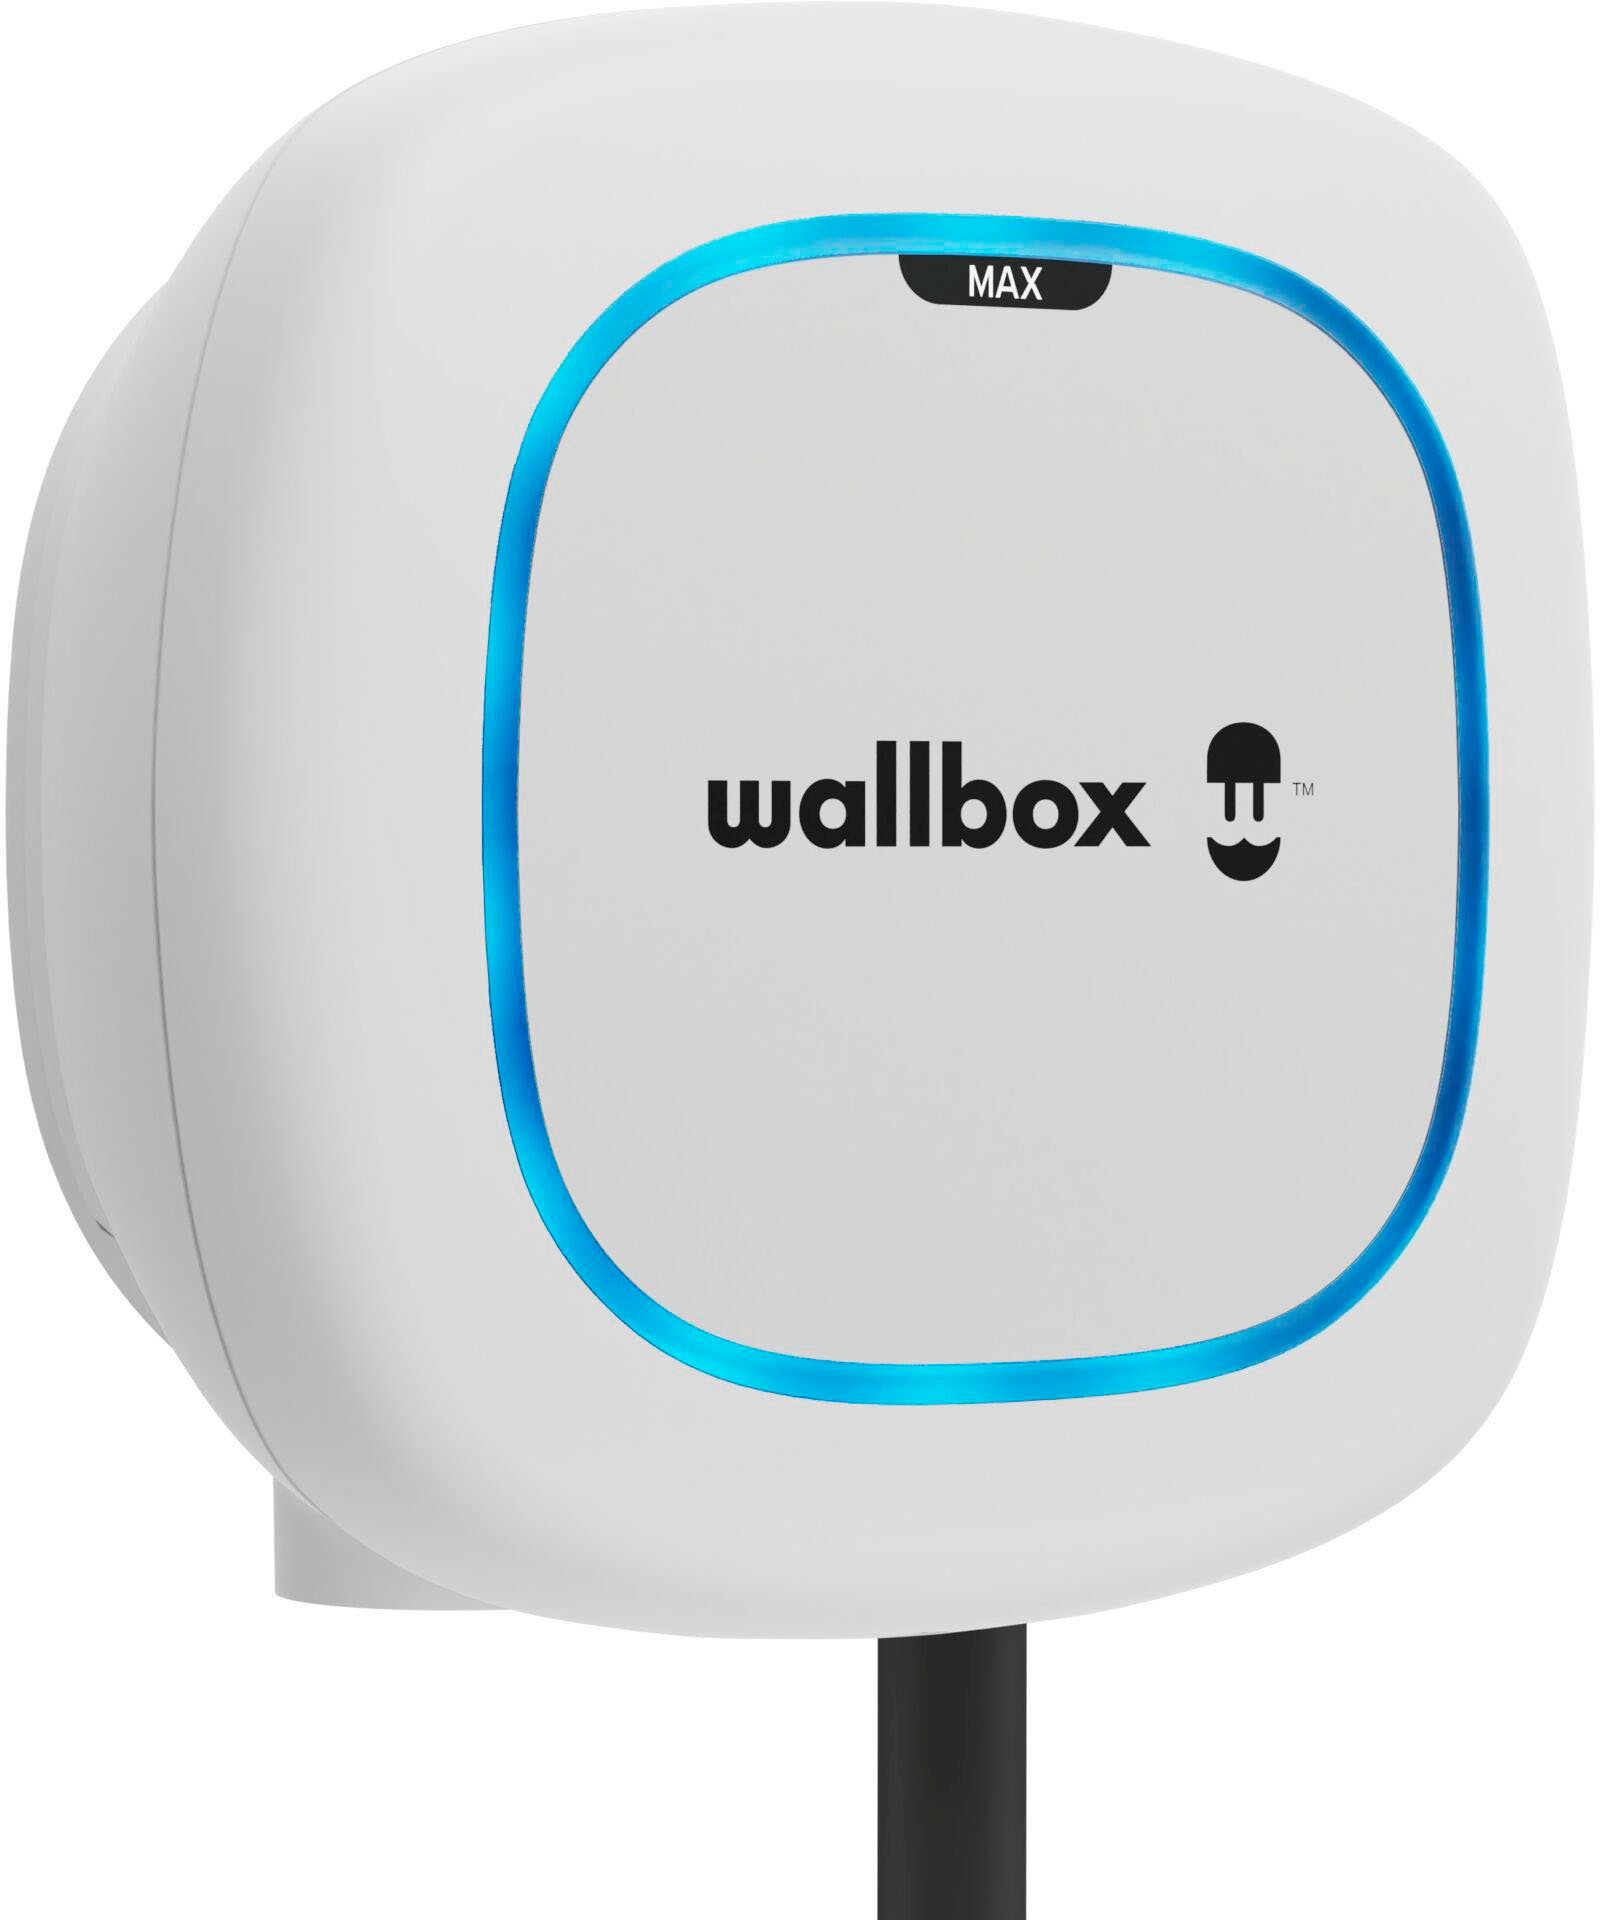 Wallbox Elektroauto-Ladestation Pulsar Max, 3-phasig, Kabel m 5